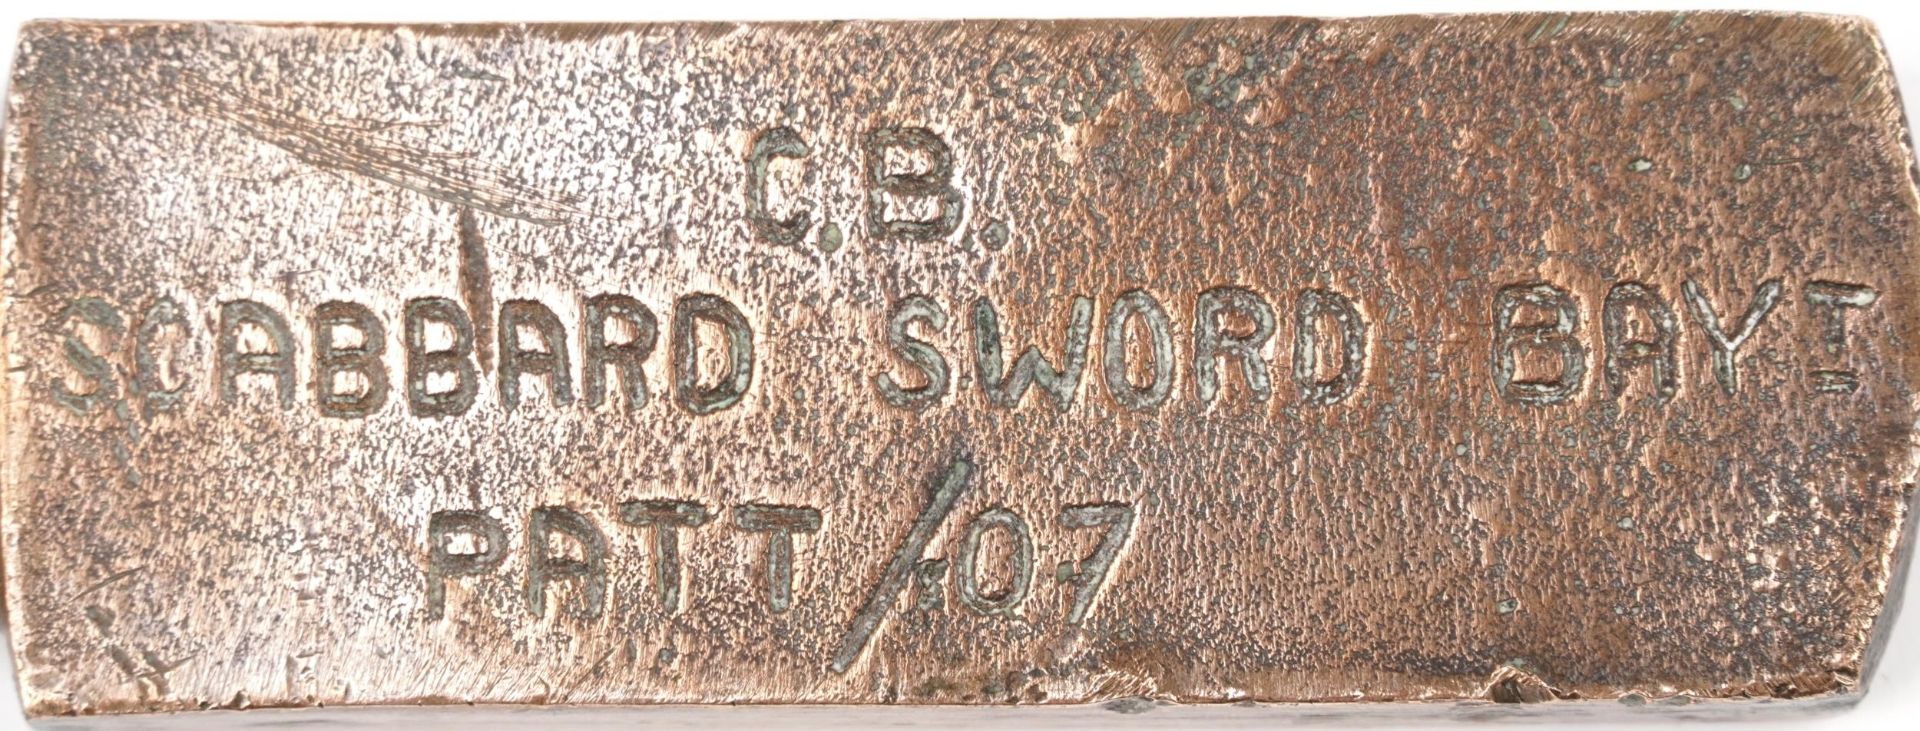 Military interest World War I bronze C B scabbard, sword and bayonet quality checker, patt/07, - Image 4 of 4